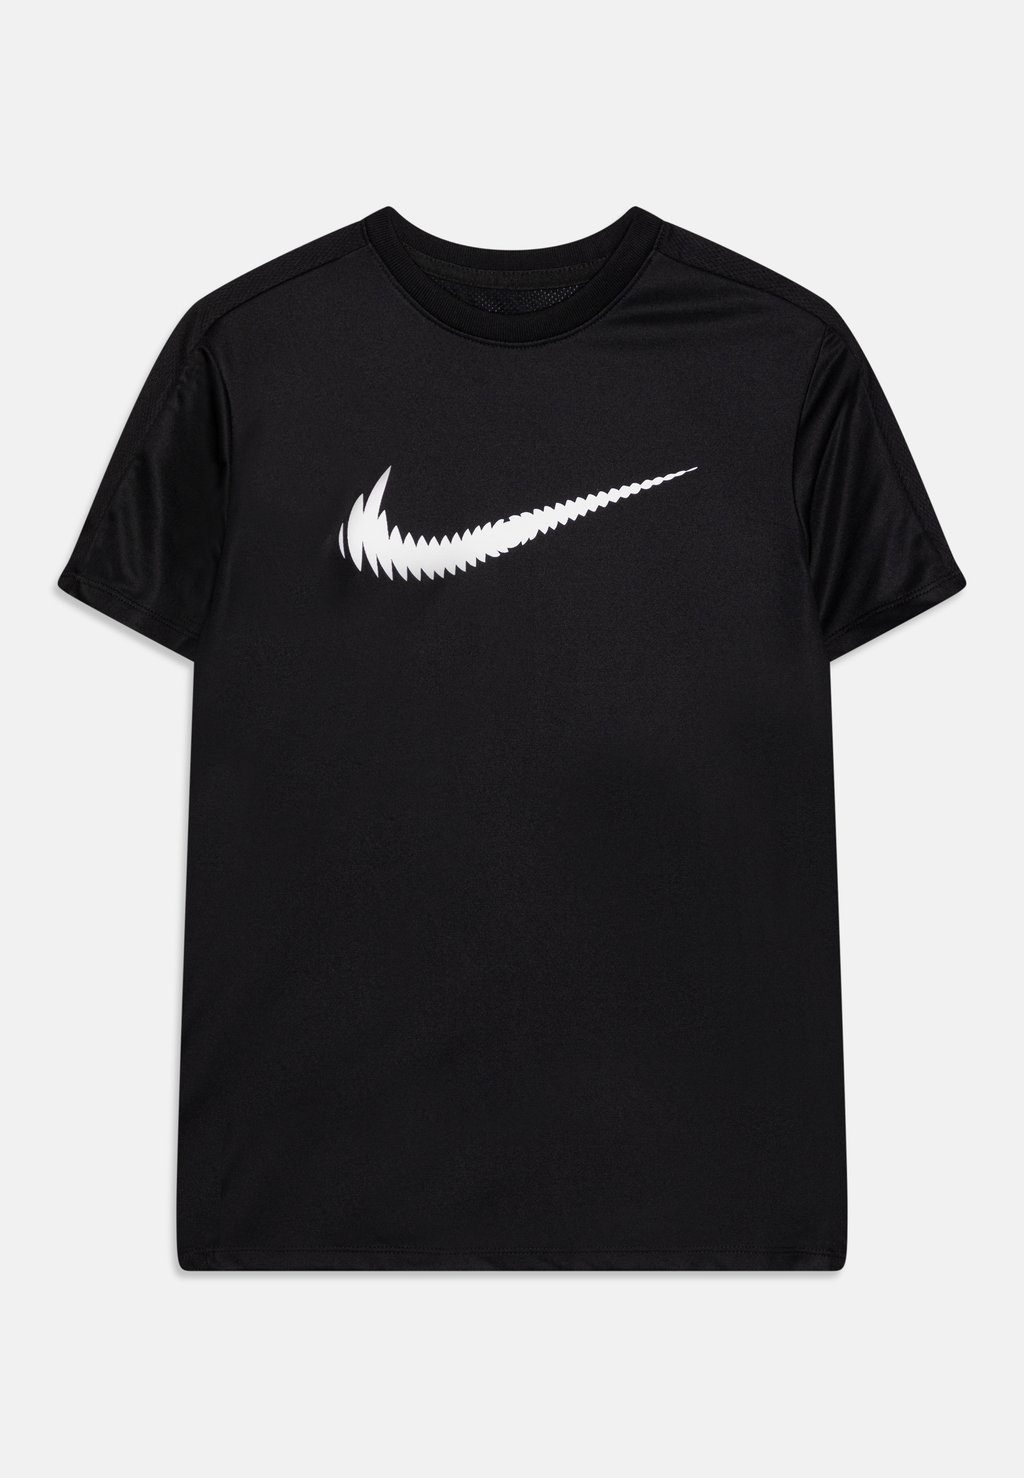 Спортивная футболка Df Unisex Nike, цвет black/white спортивная футболка df unisex nike цвет university red white